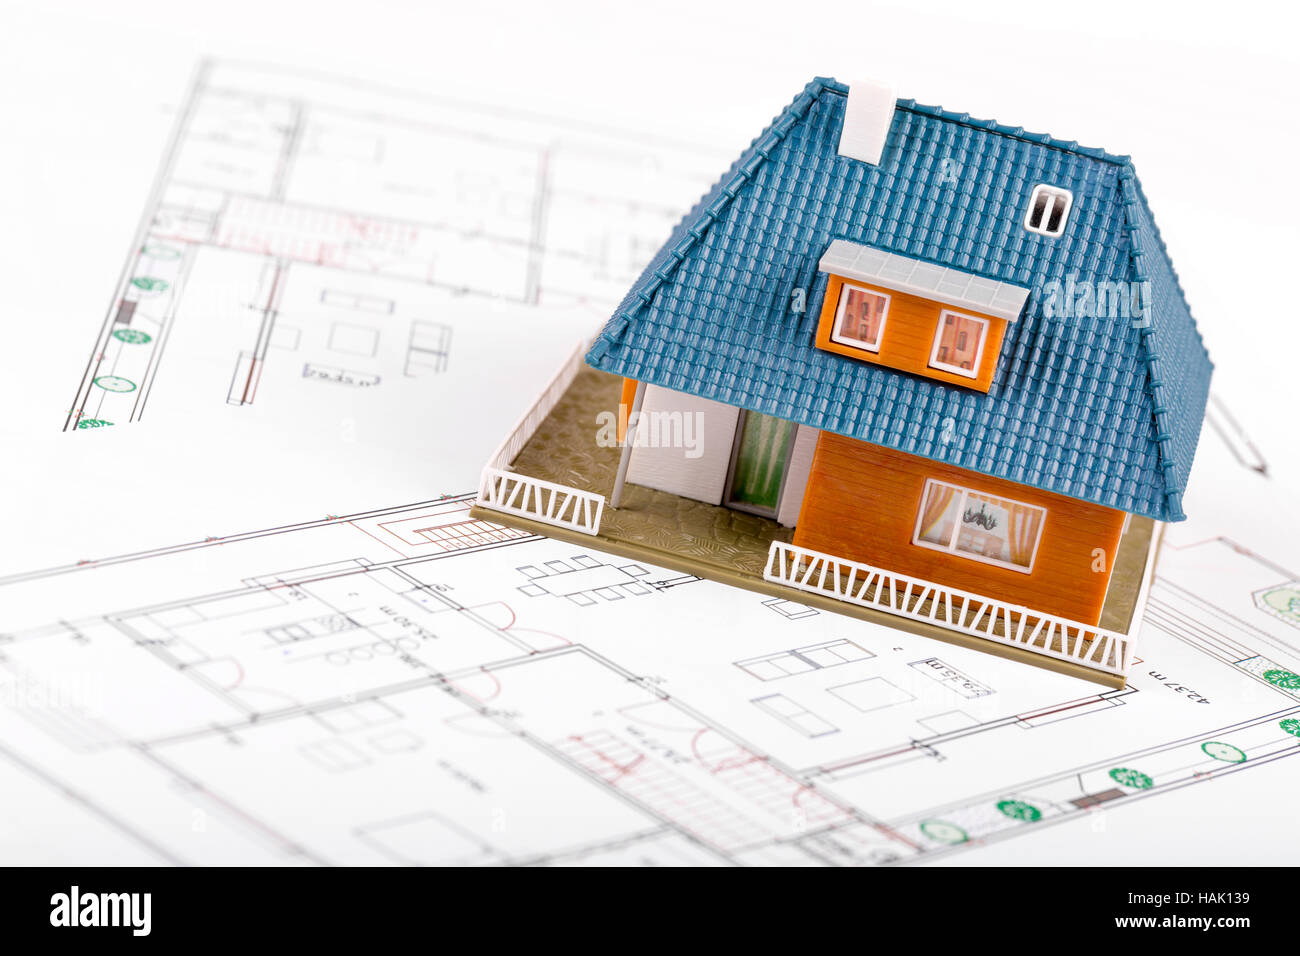 real estate development - house scale model on blueprints Stock Photo